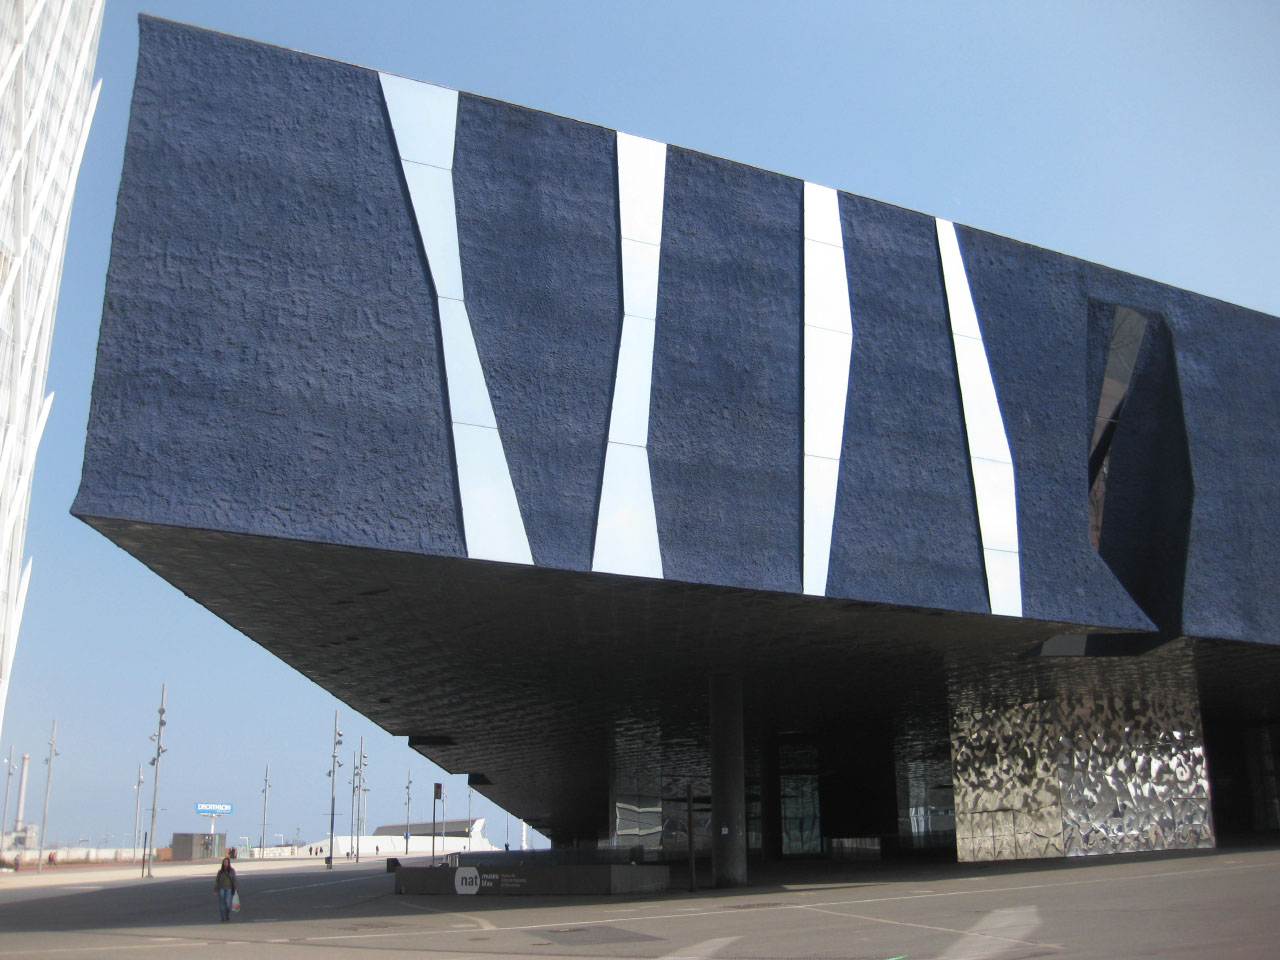 Barcelona Forum exterior blue concrete cladding by Herzog and de Meuron